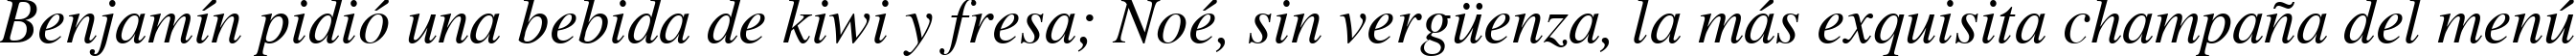 Пример написания шрифтом Times Italic текста на испанском